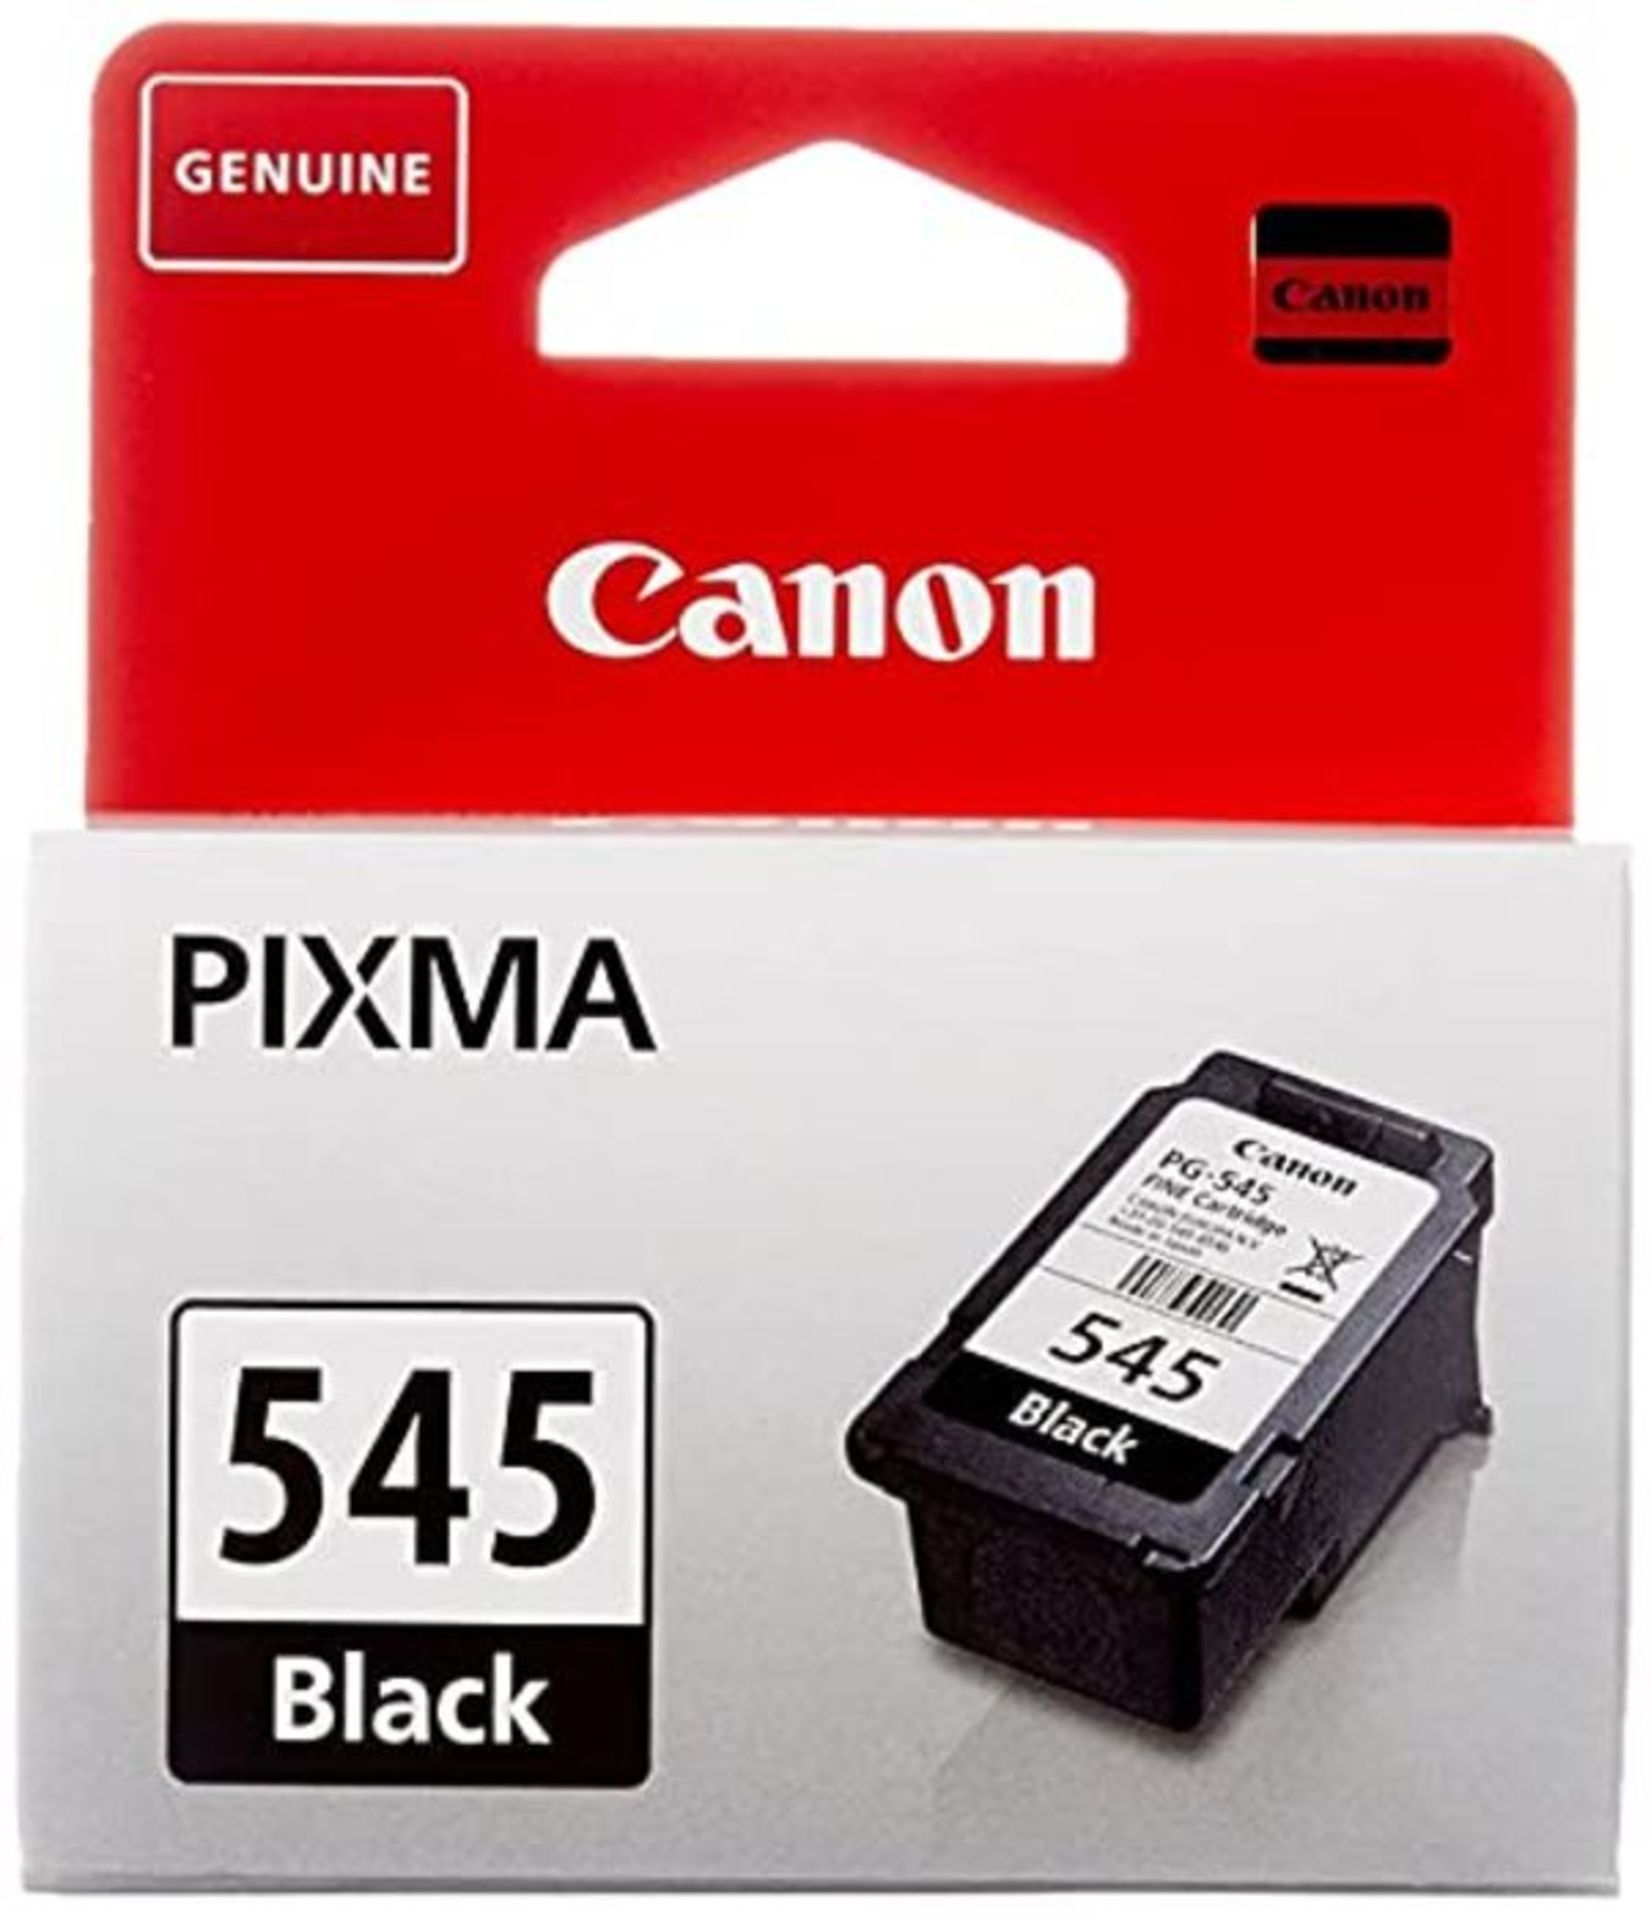 Canon Original PG-545 Black ink cartridge